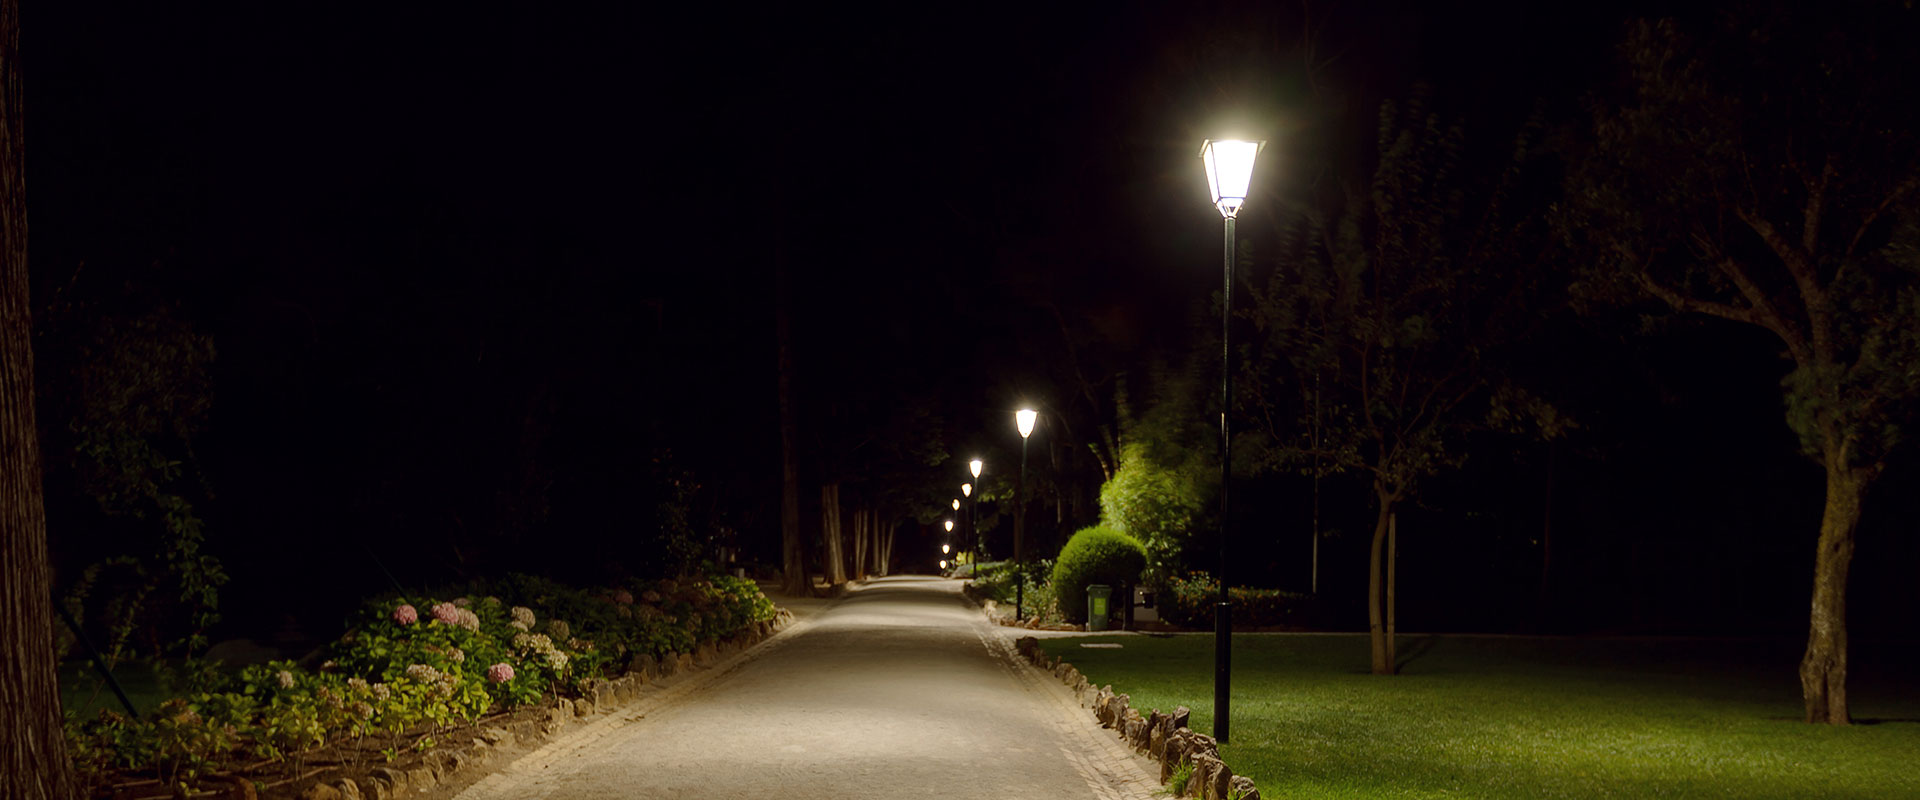 iluminacao-LED-parque-marechal-carmona